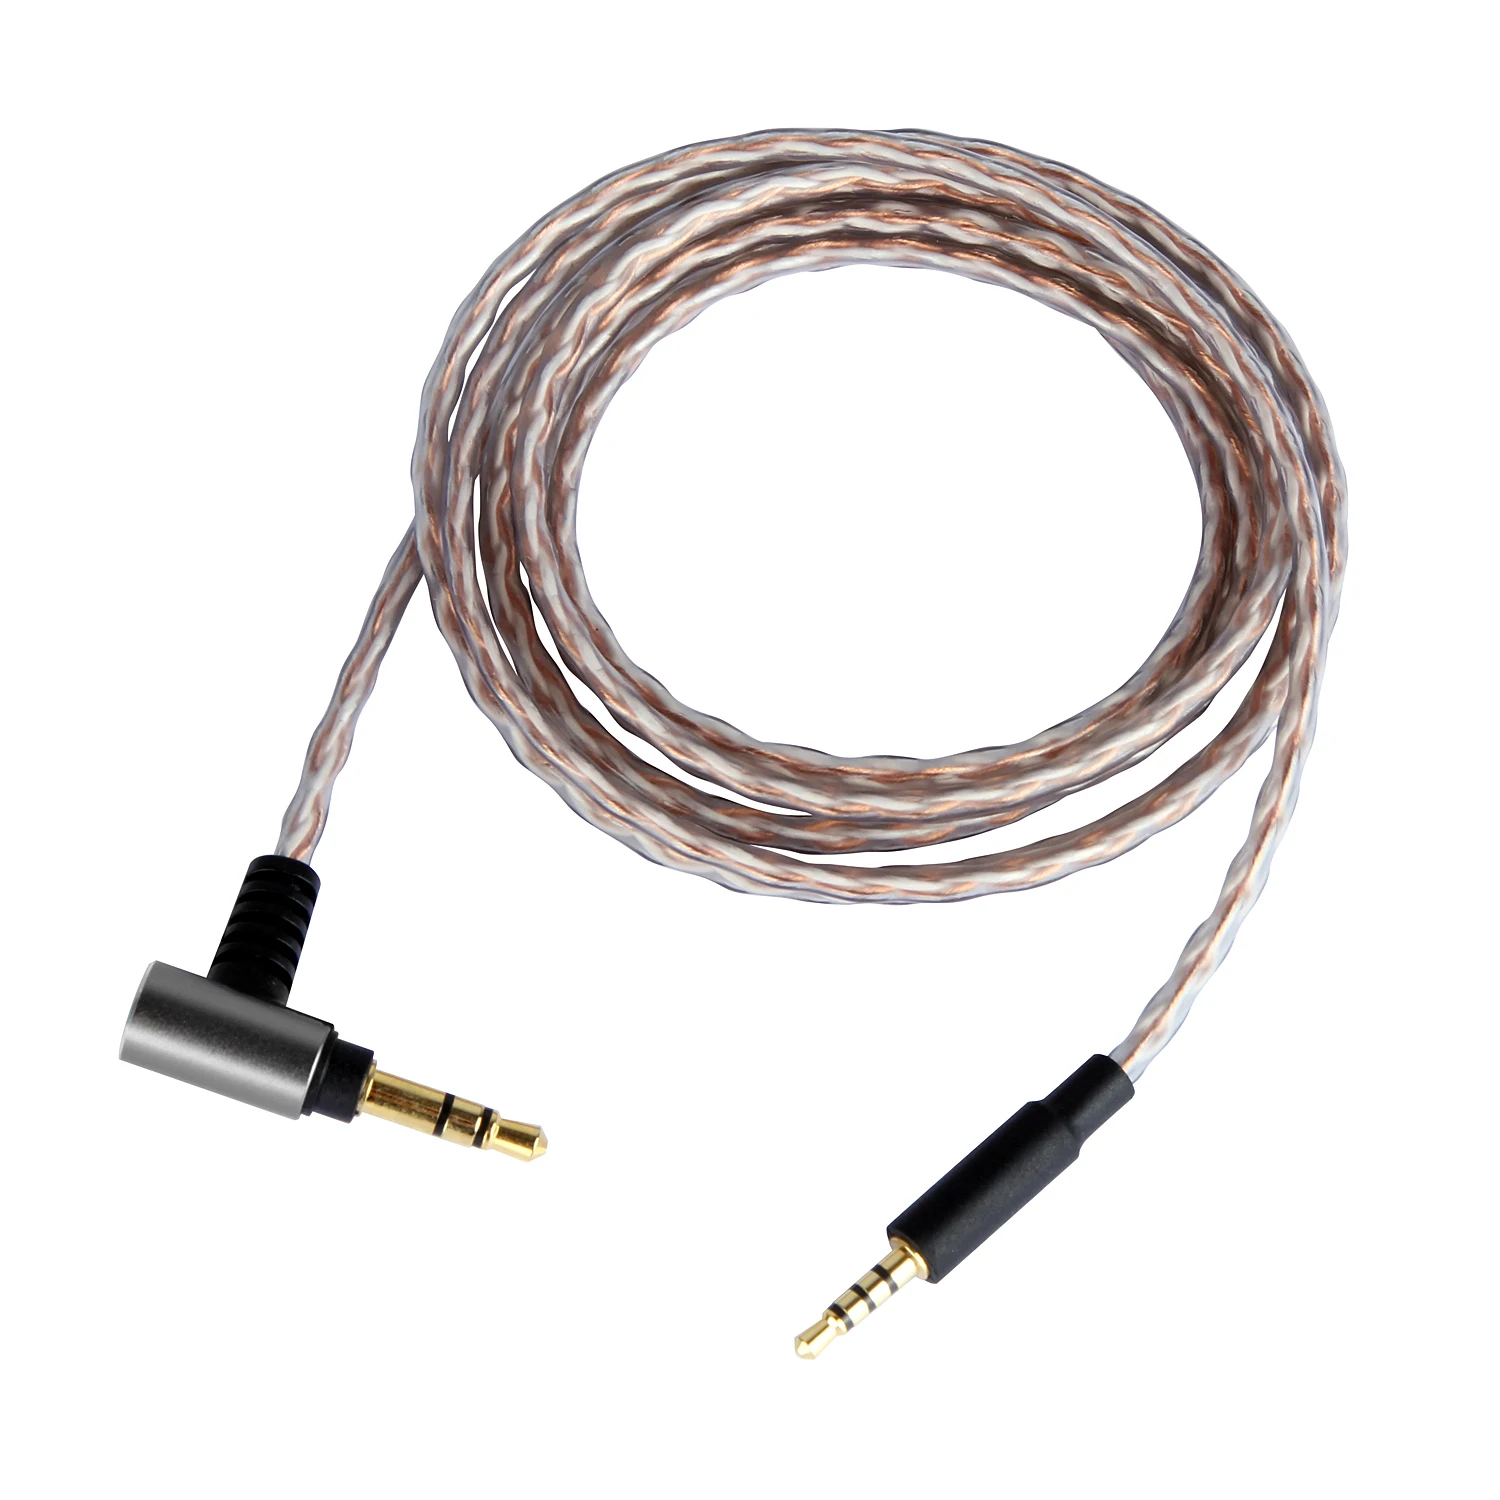 

New! 4-core braid OCC Audio Cable For JBL EVEREST 300 700 310GA 710GA 310 710 On-ear Elite headphones